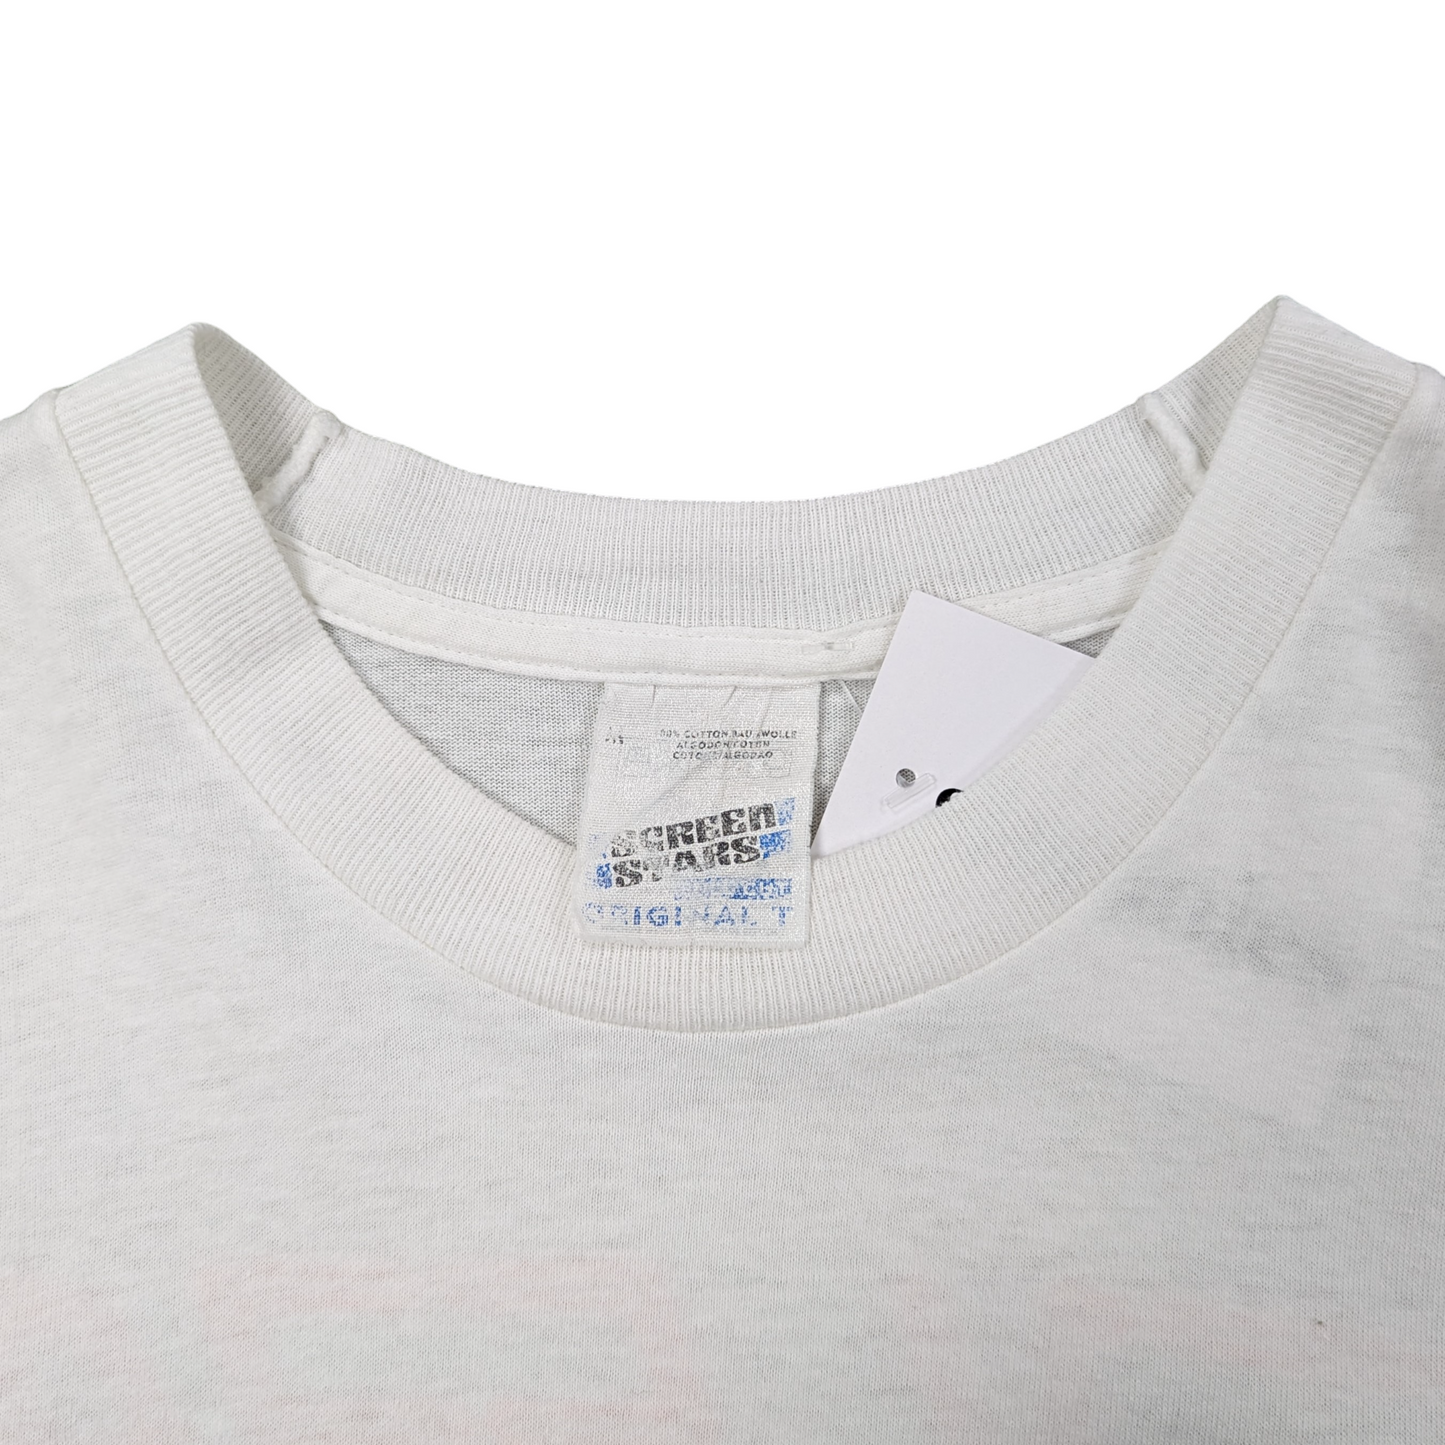 90s Open Space Single Stitch T-Shirt Size M